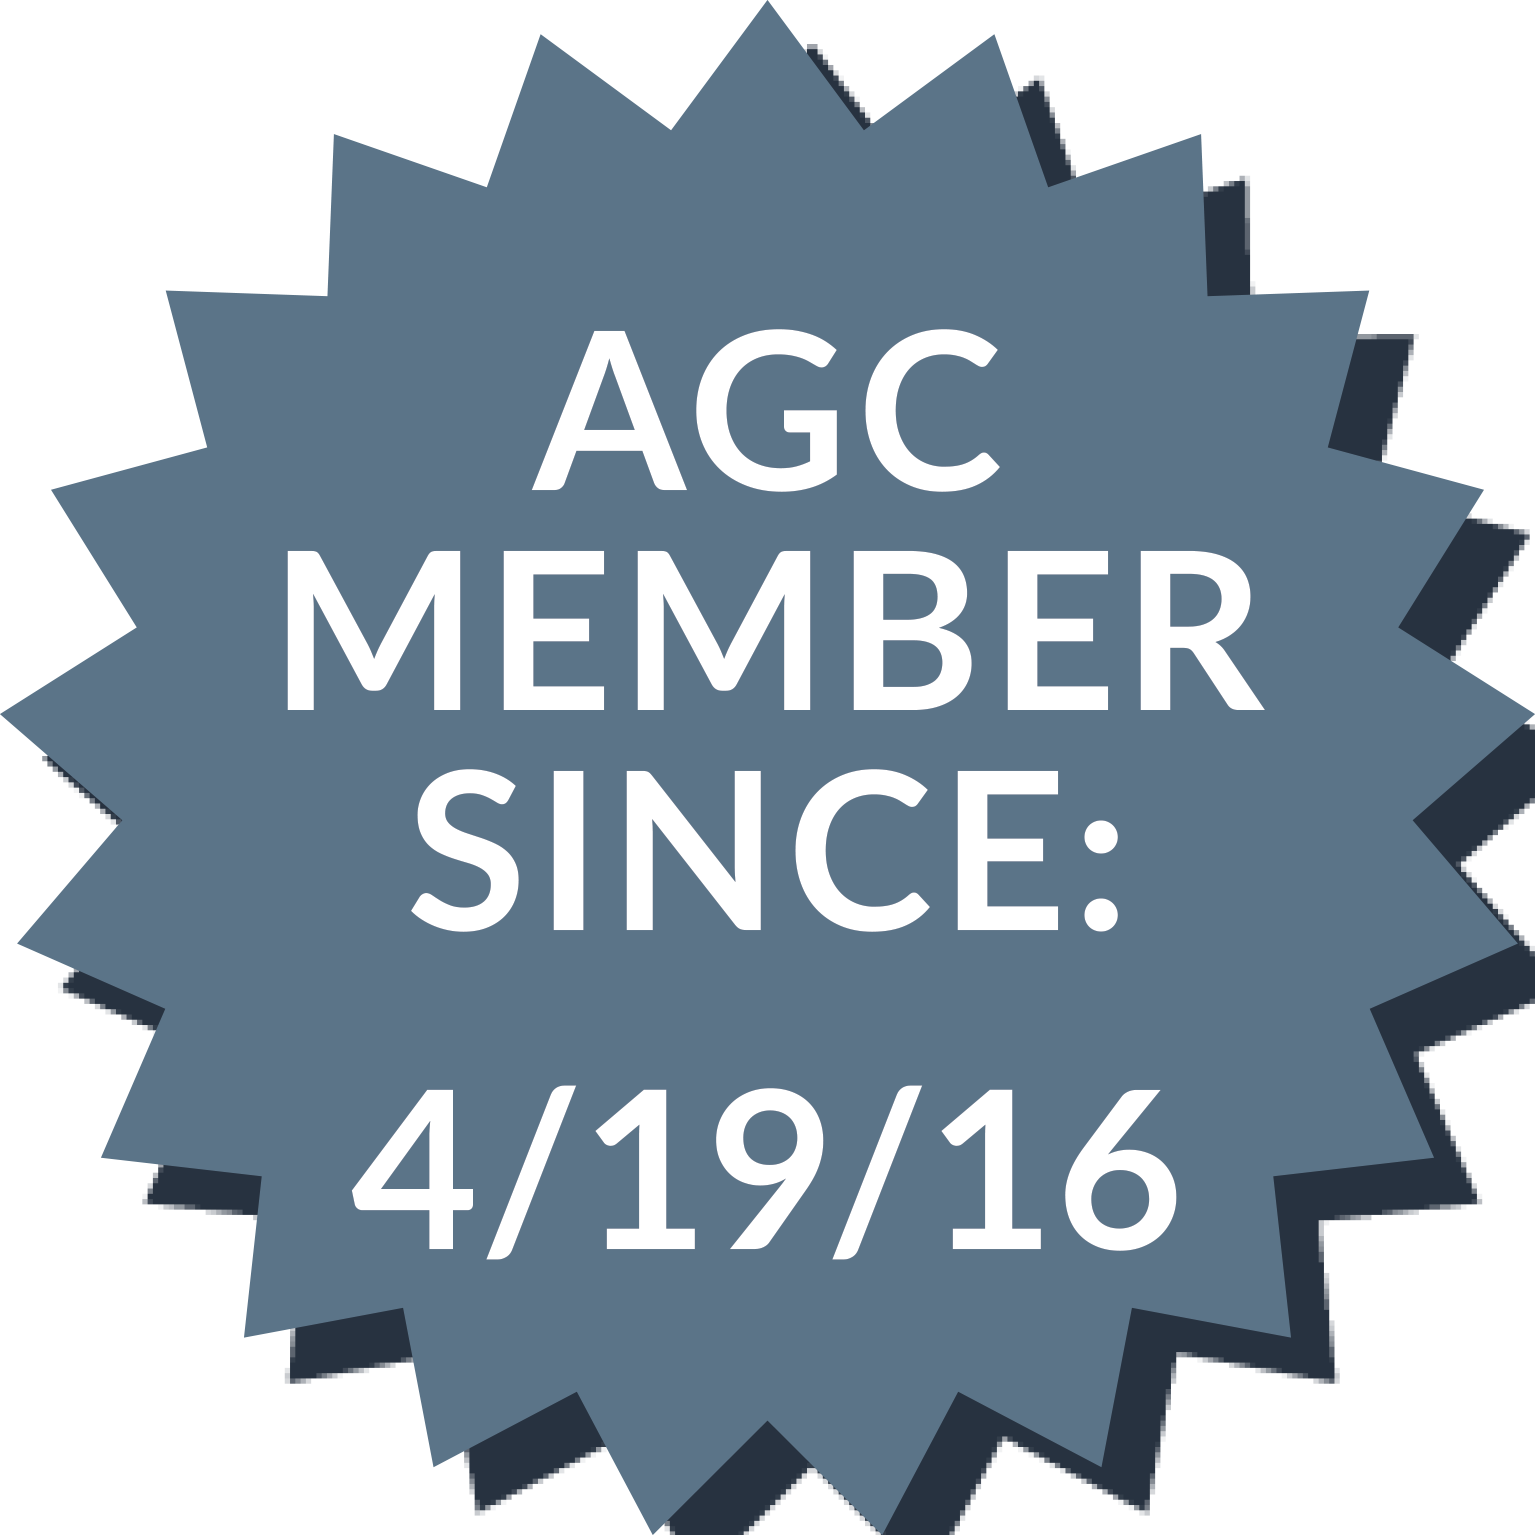 AGC Member Since: 4/19/16